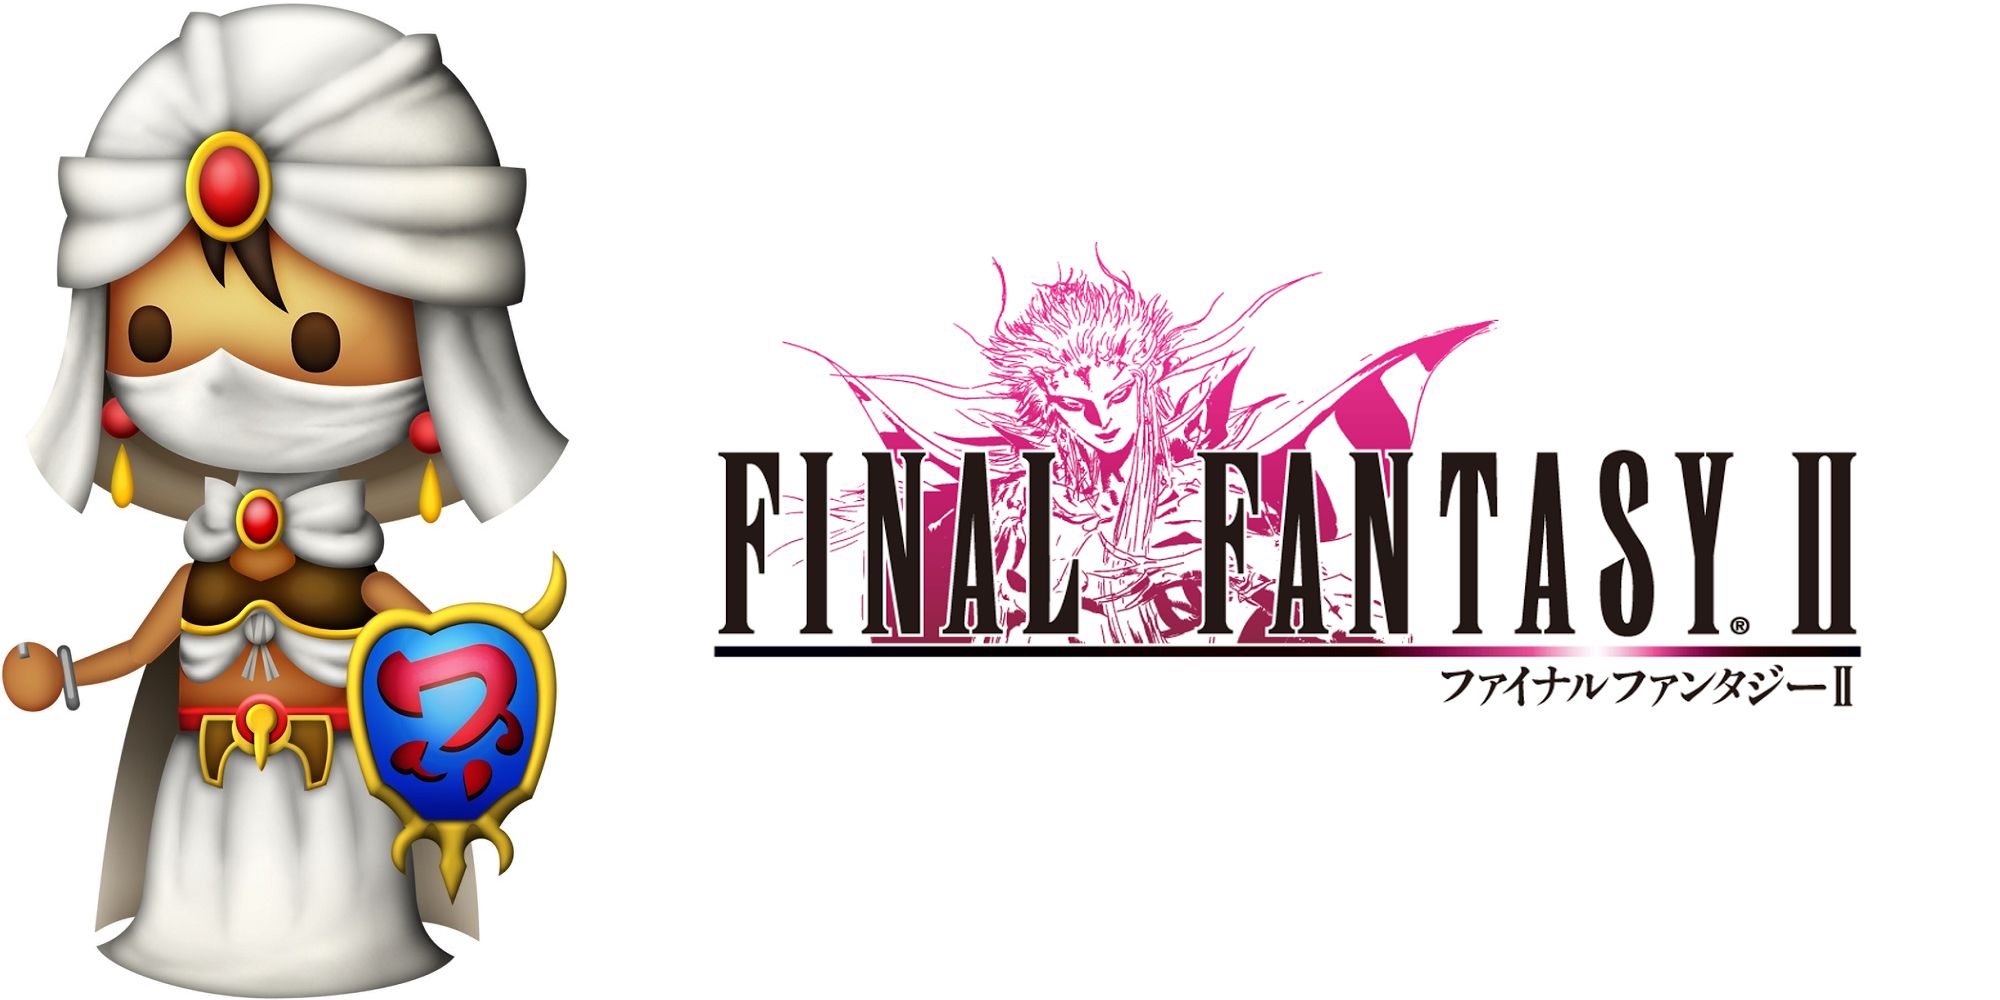 Minwu From Theatrhythm Final Fantasy And The Final Fantasy II Logo